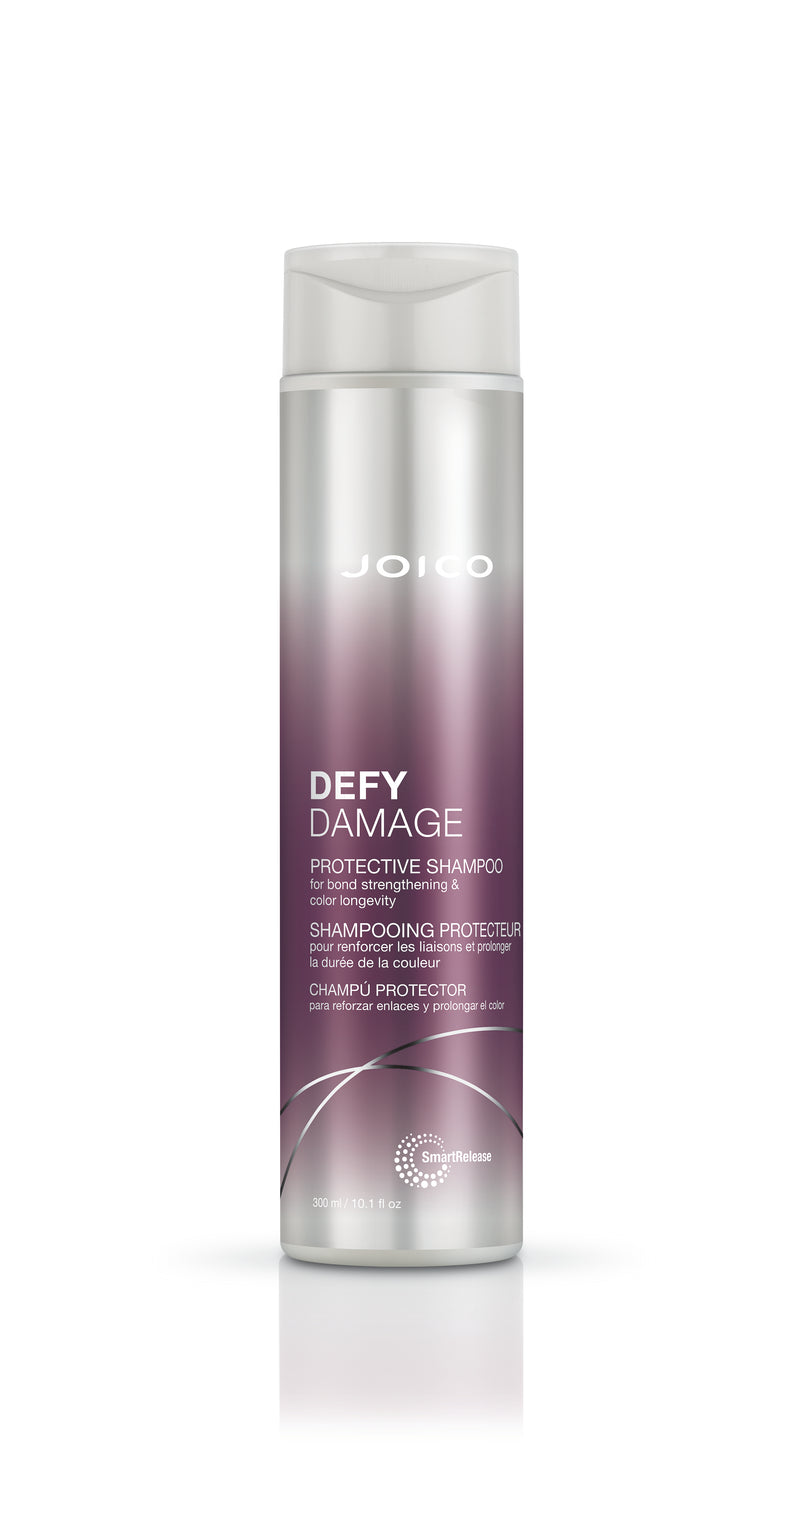 Joico DEFY DAMAGE Protective Shampoo (300mL)